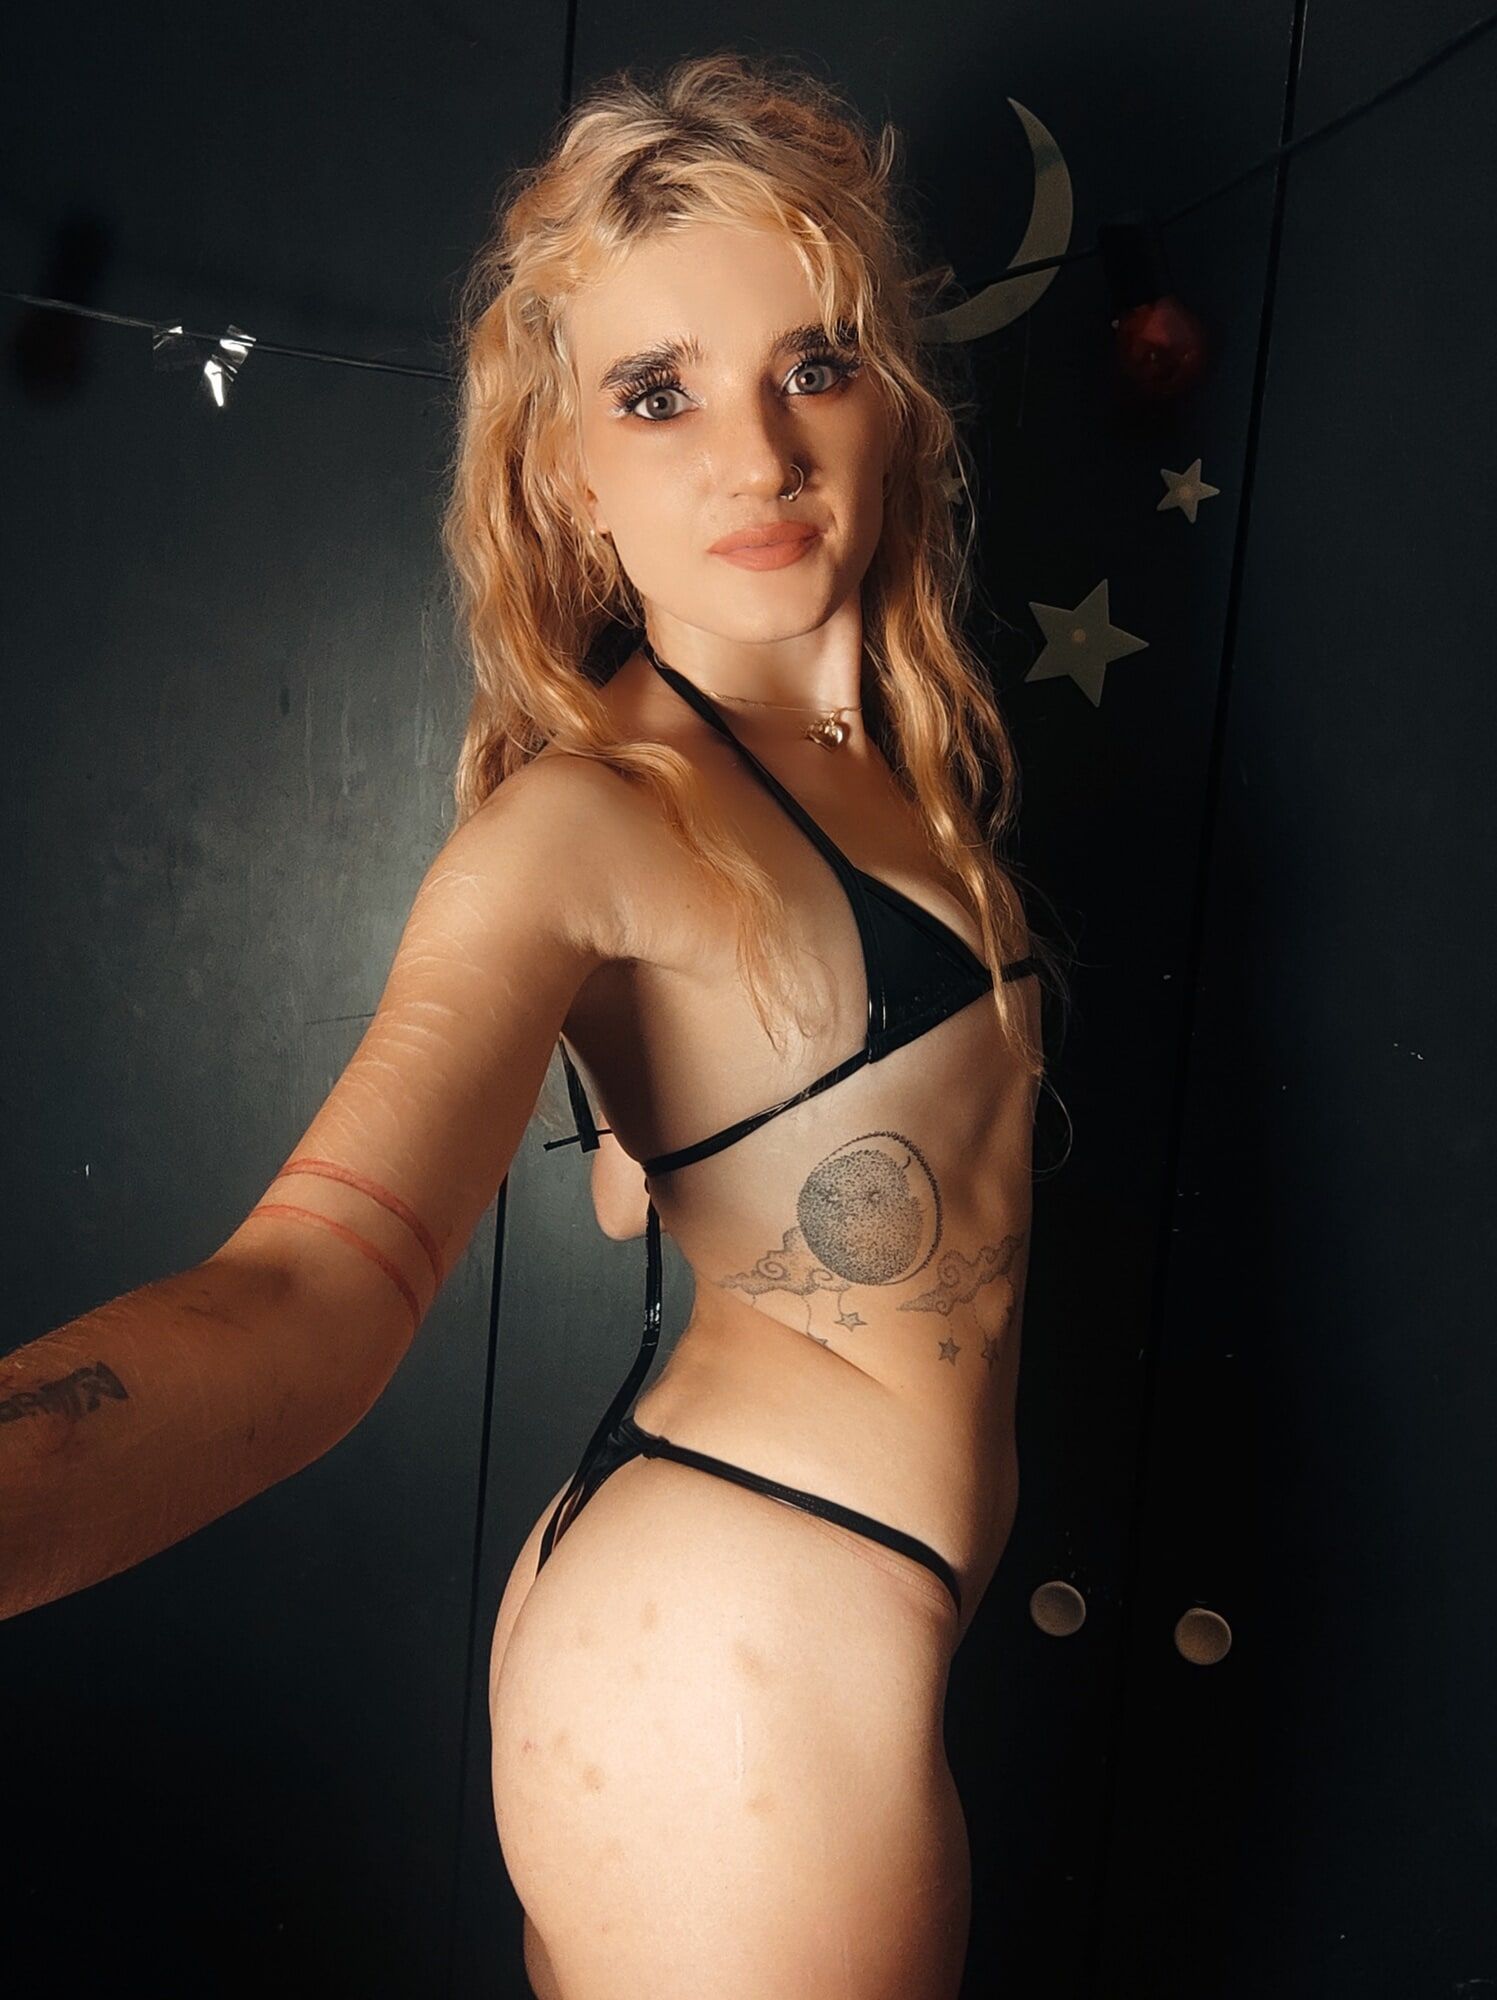 I'm feeling playful in my little fake leather bikini  #2